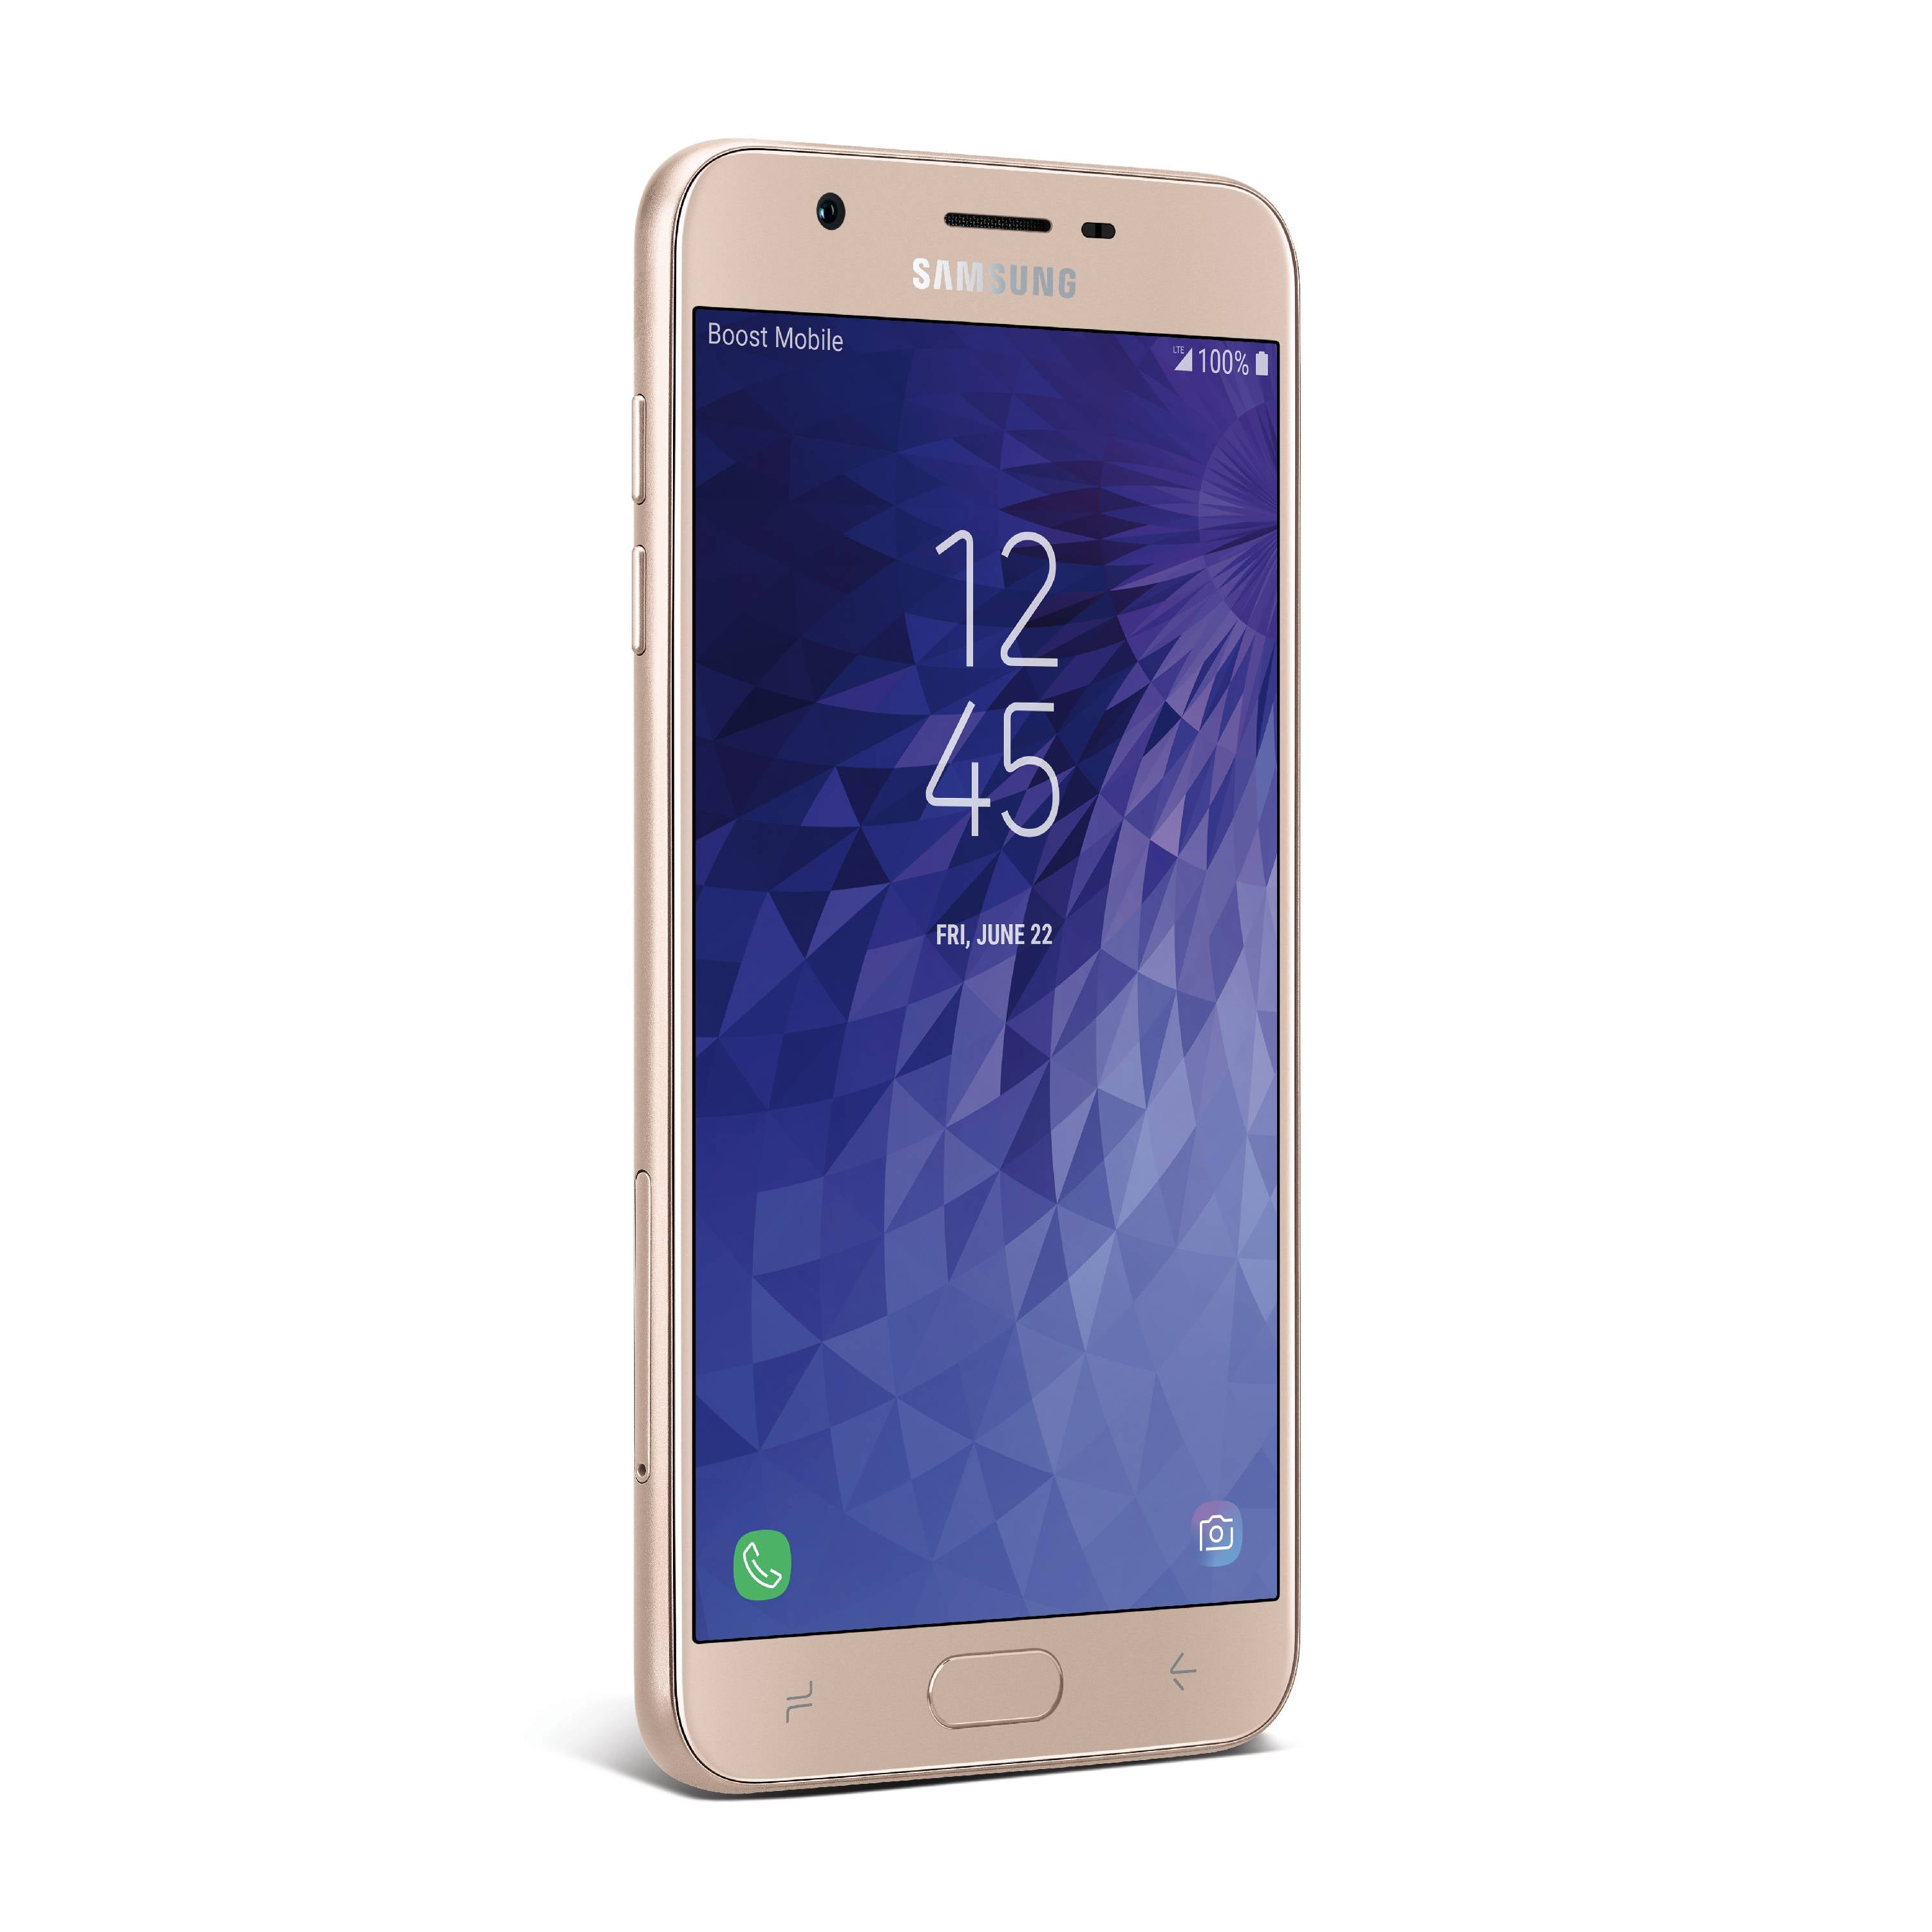 Boost Mobile Samsung J7 Refine 32GB Prepaid Smartphone, Gold 